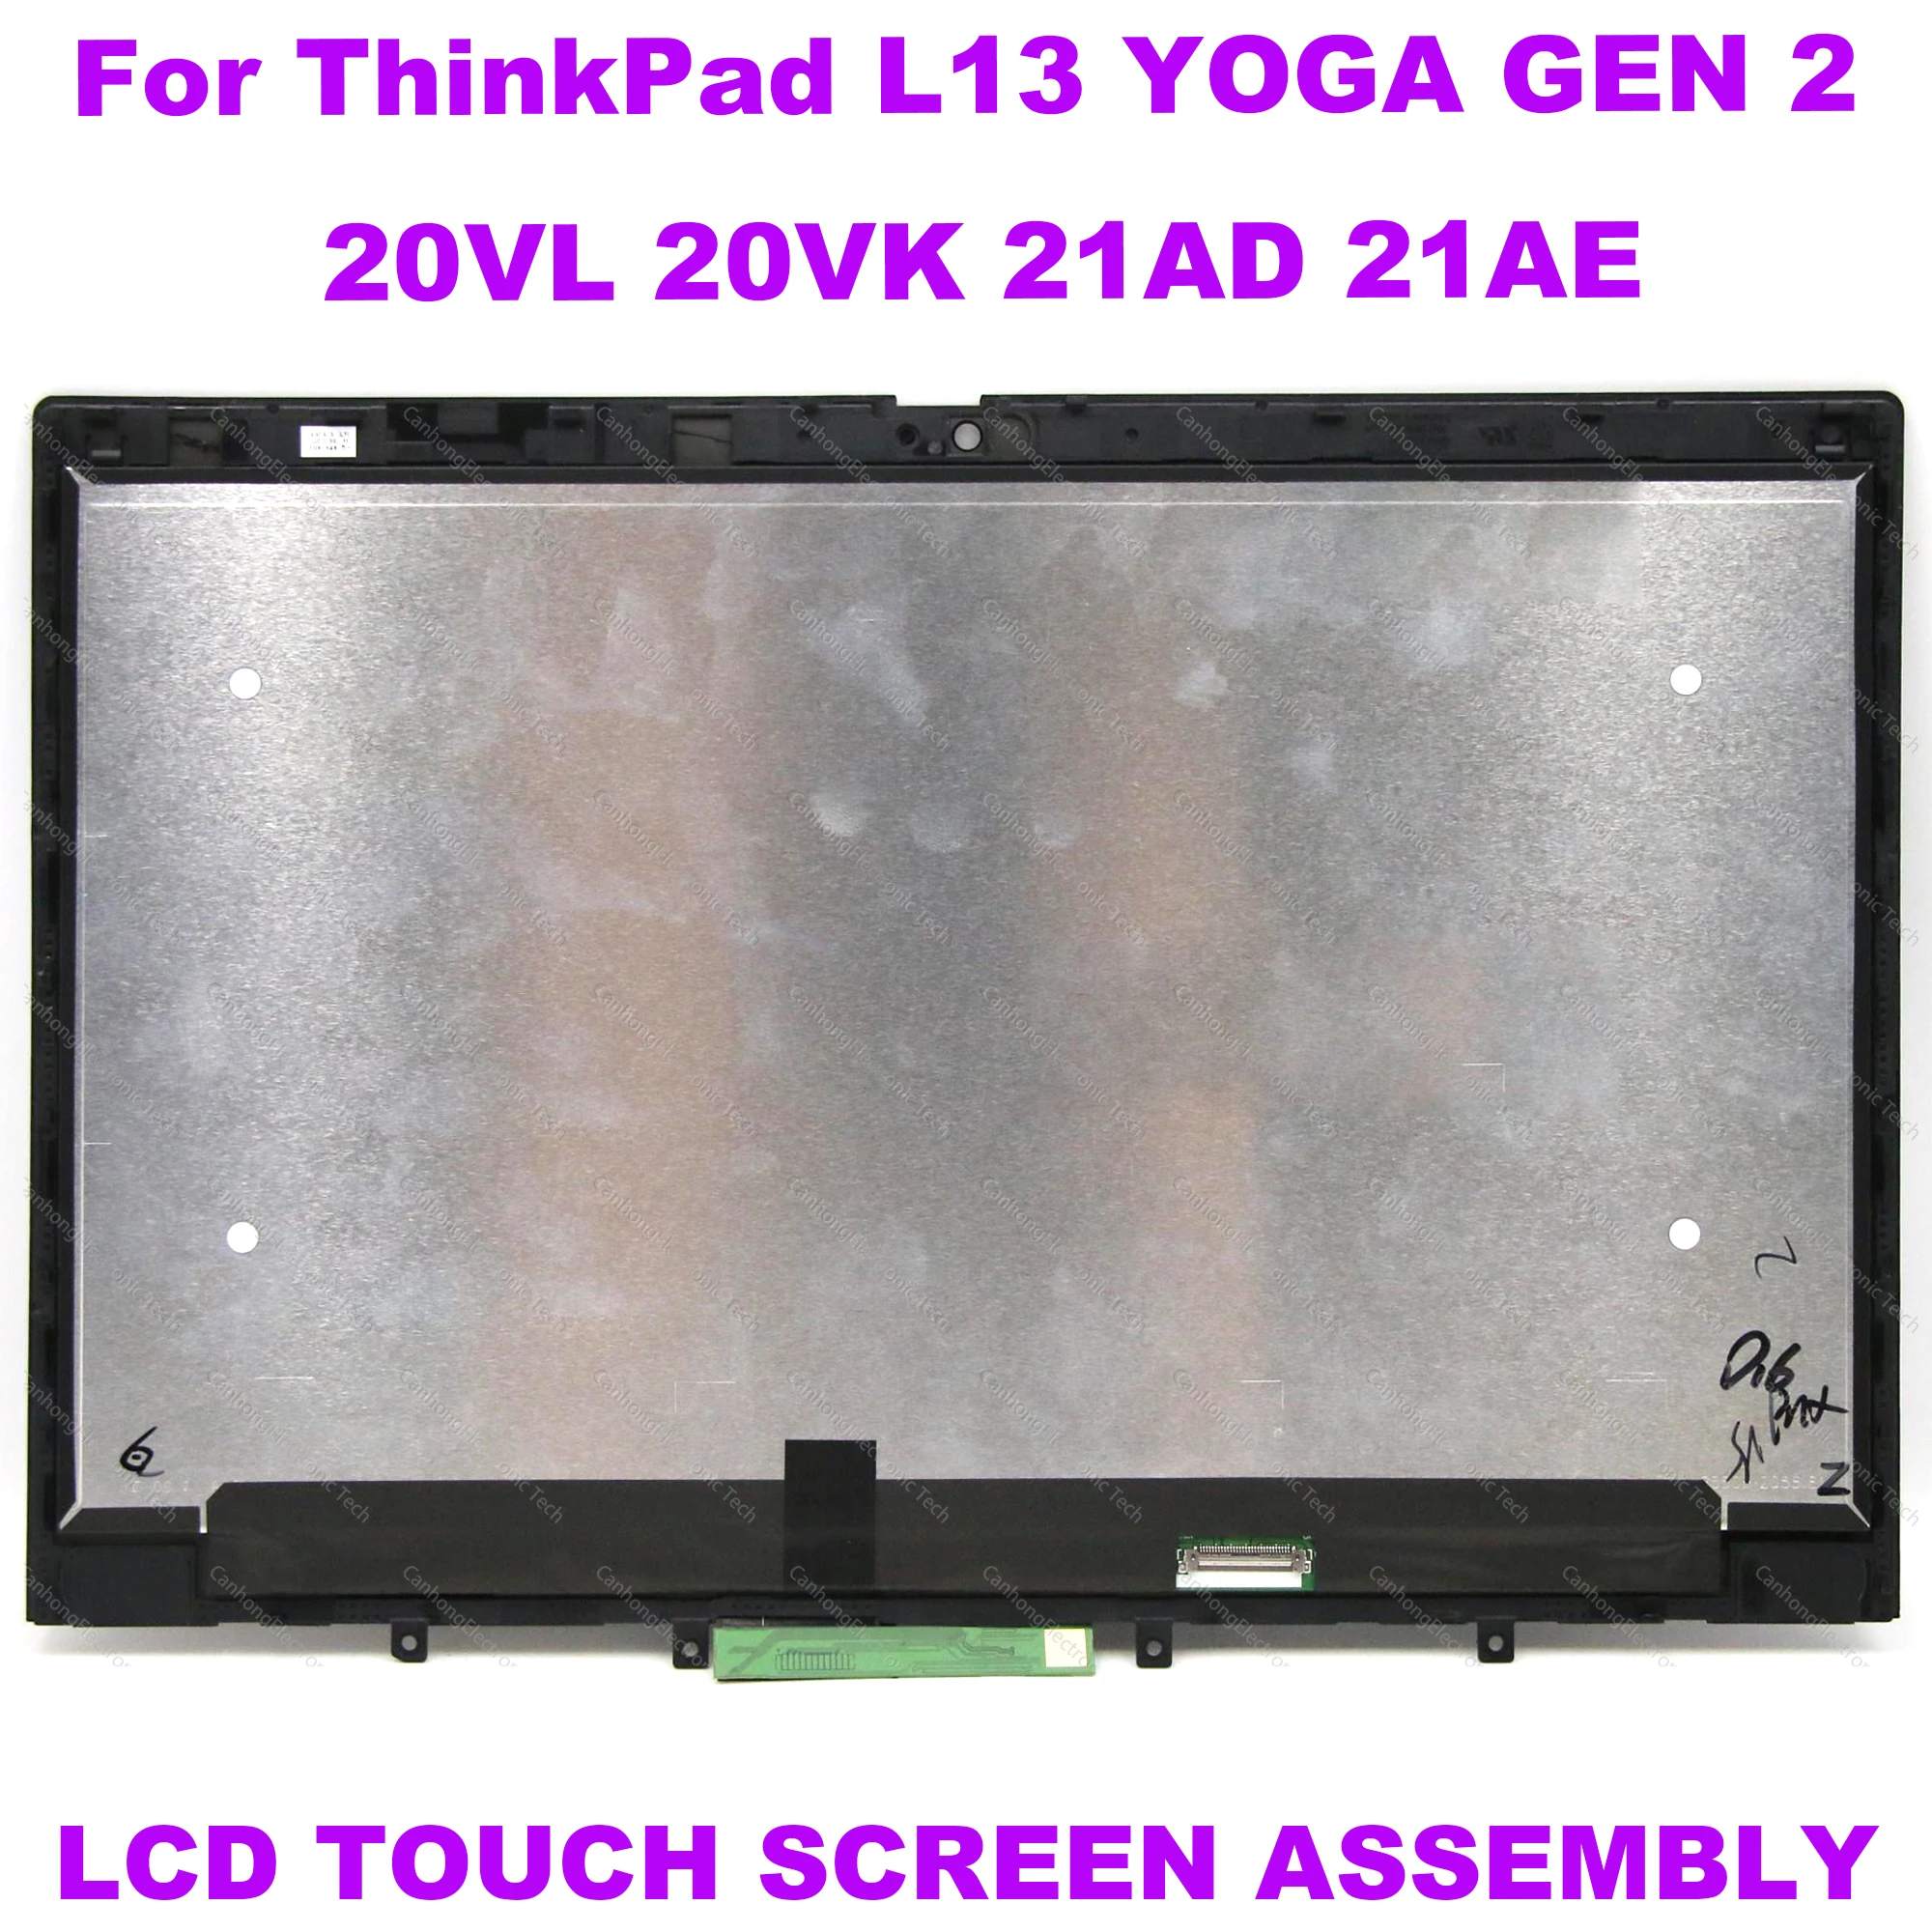  -  Lenovo ThinkPad L13 YOGA GEN 2 20VL 20VK 21AD 21ae